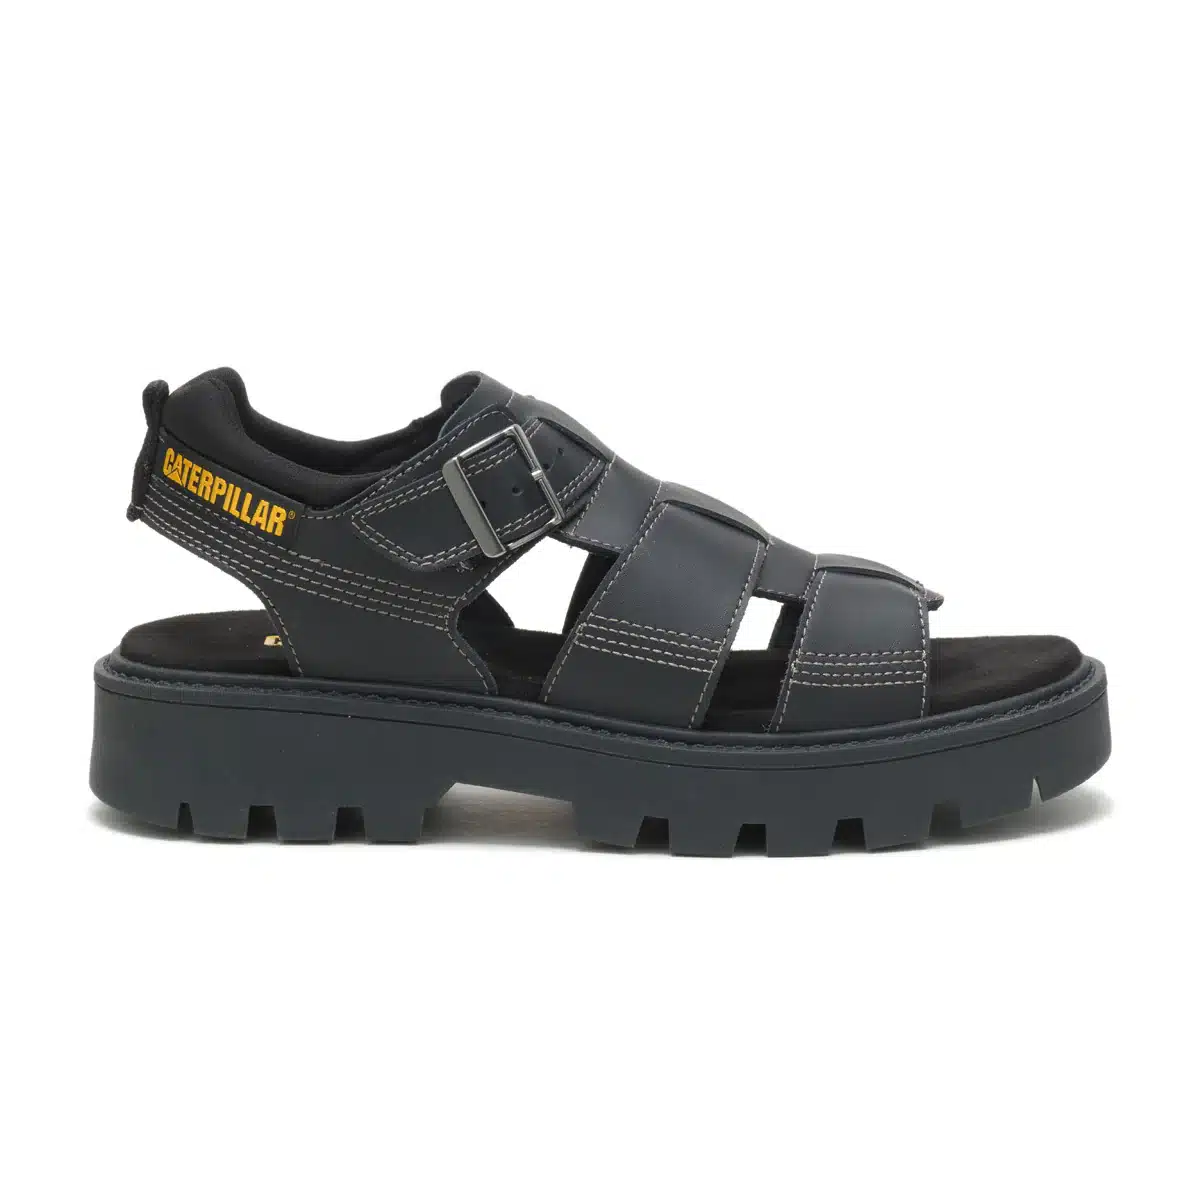 Black sandal shoes on sale